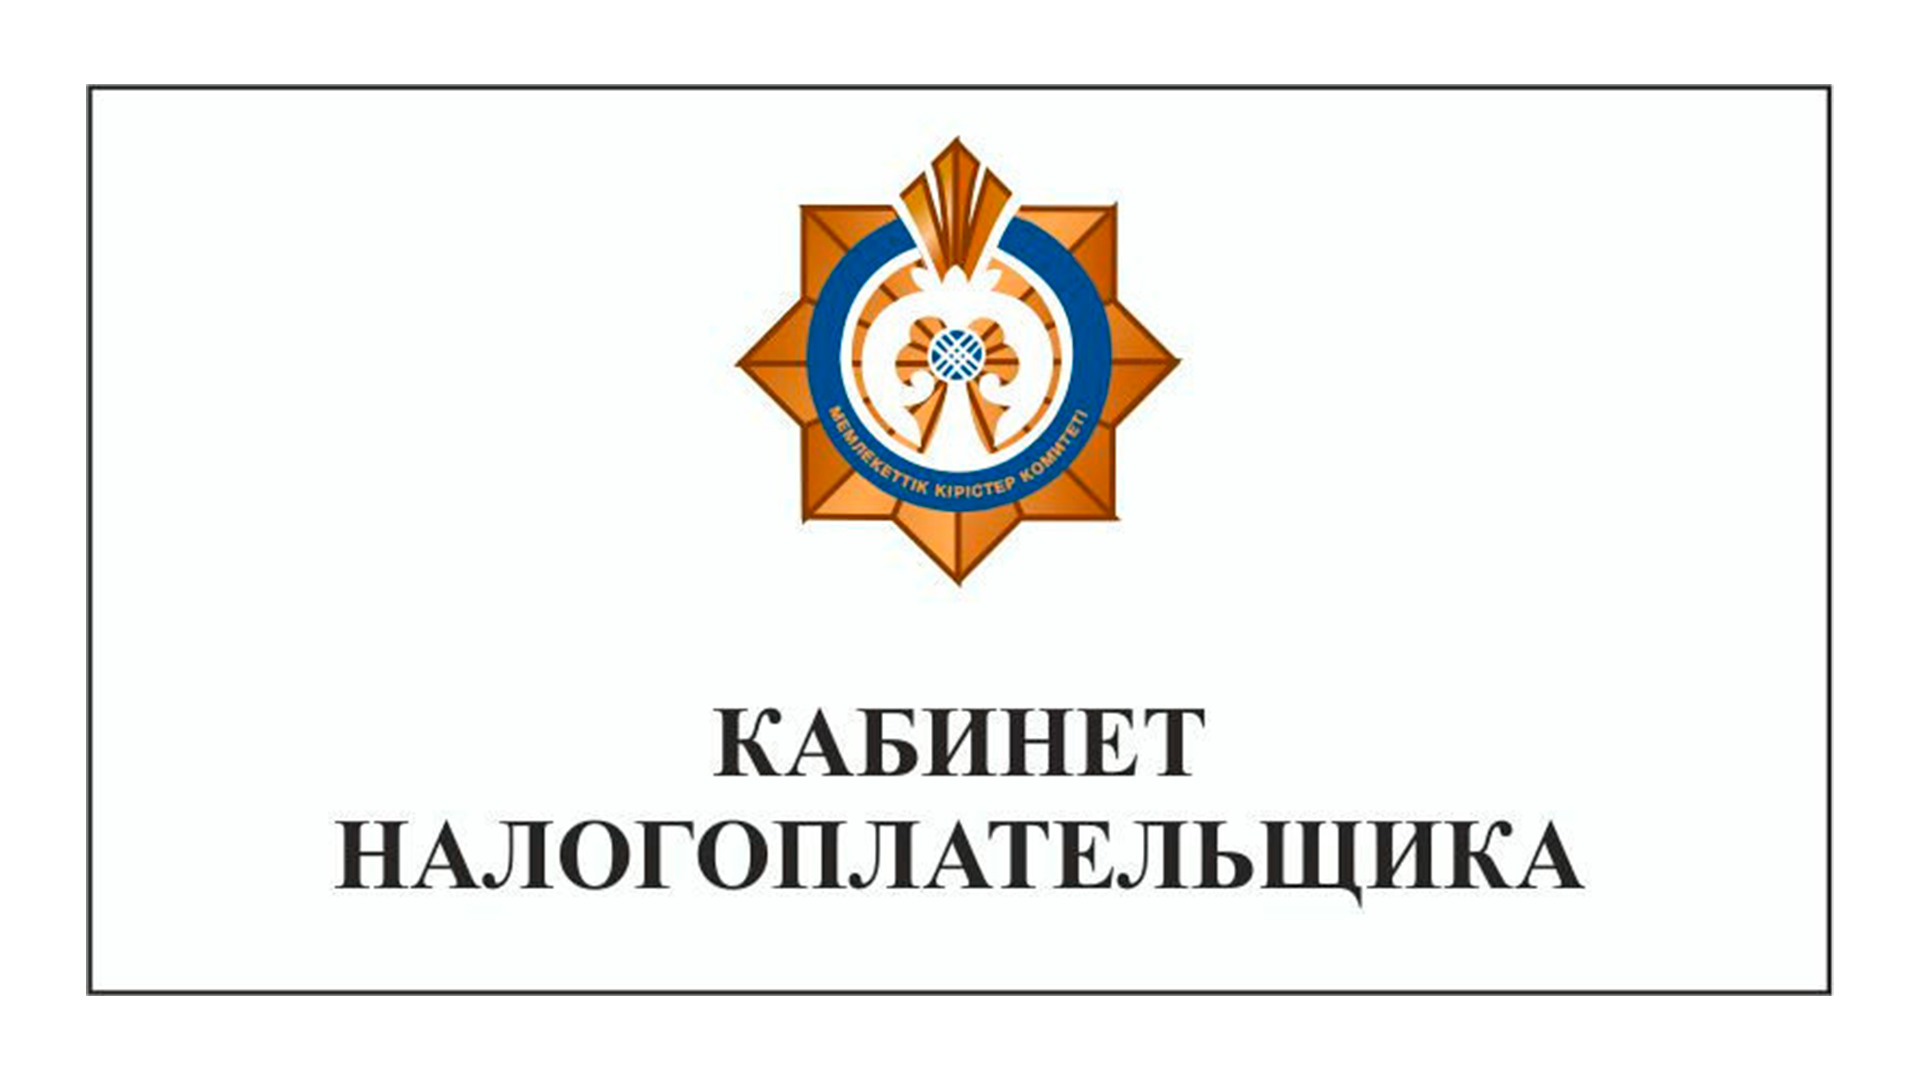 Сайт налогов казахстана. Кабинет налогоплательщика. Салык.кз кабинет налогоплательщика. Кабинет налогоплательщика логотип. Логотип налоговой Казахстана.